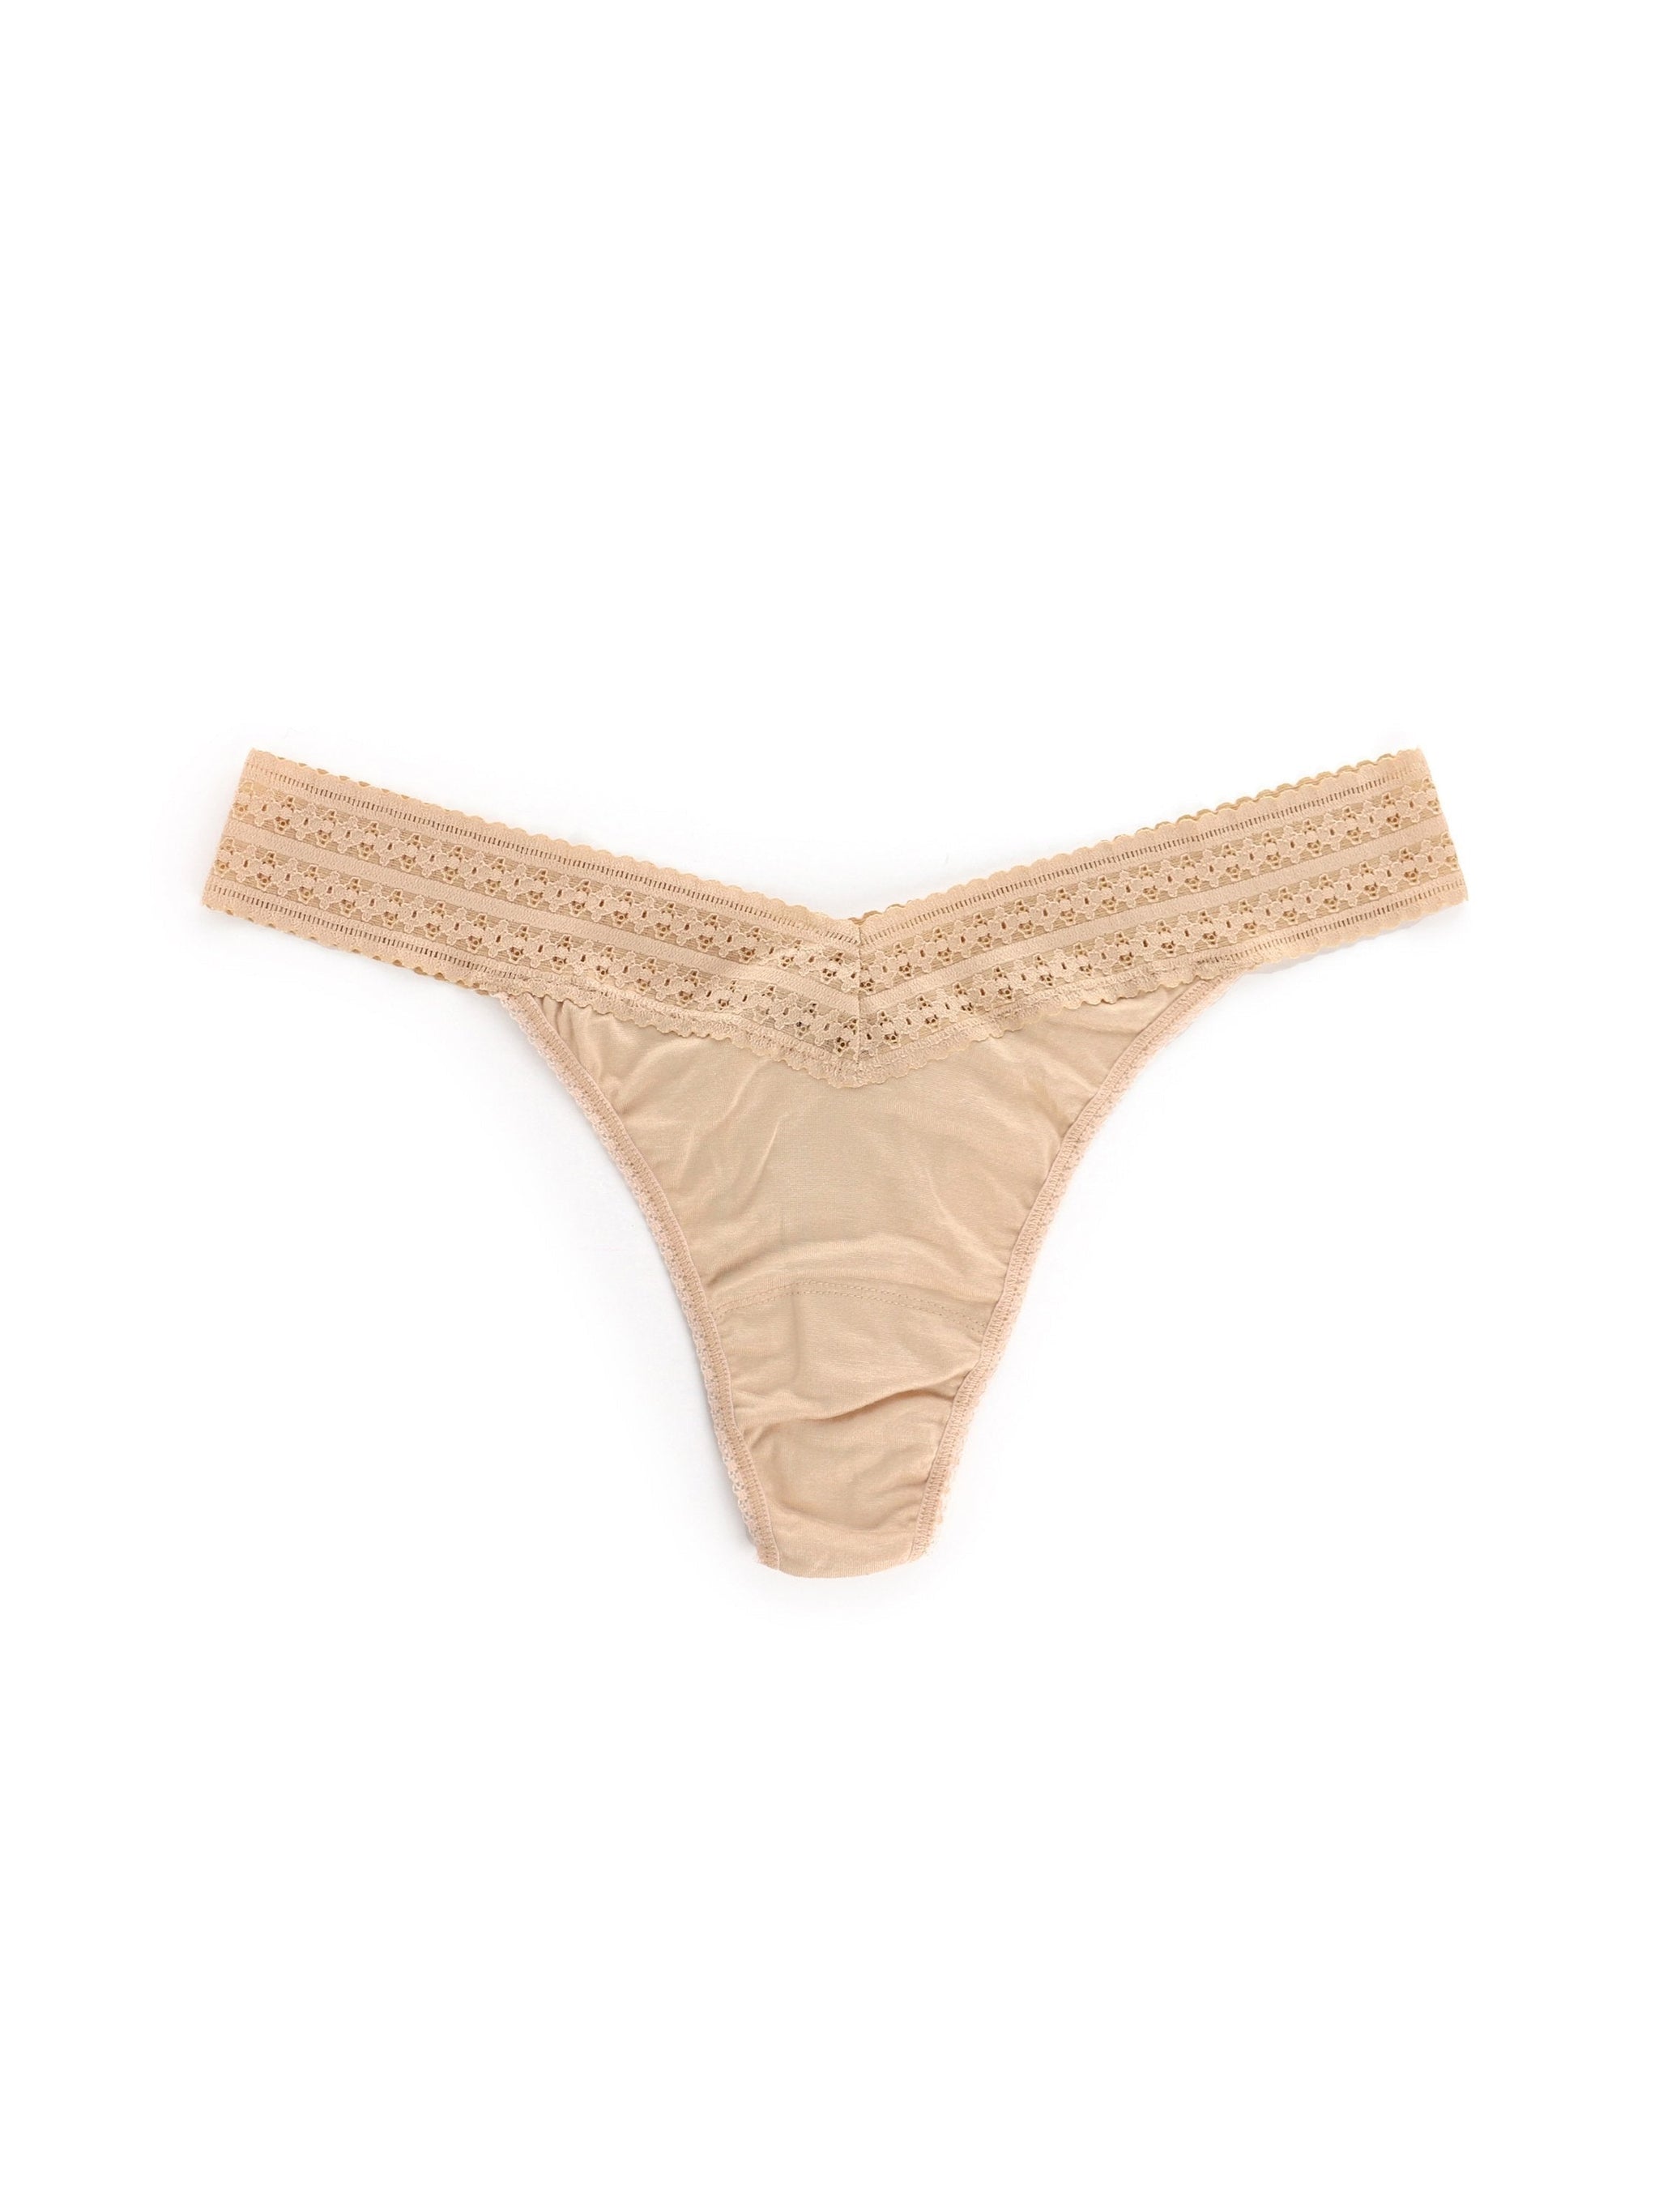 CALVIN KLEIN Women's 1 Thong Underwear Panty Plus Size 1X/2X/3X NWT MSRP  $20.00